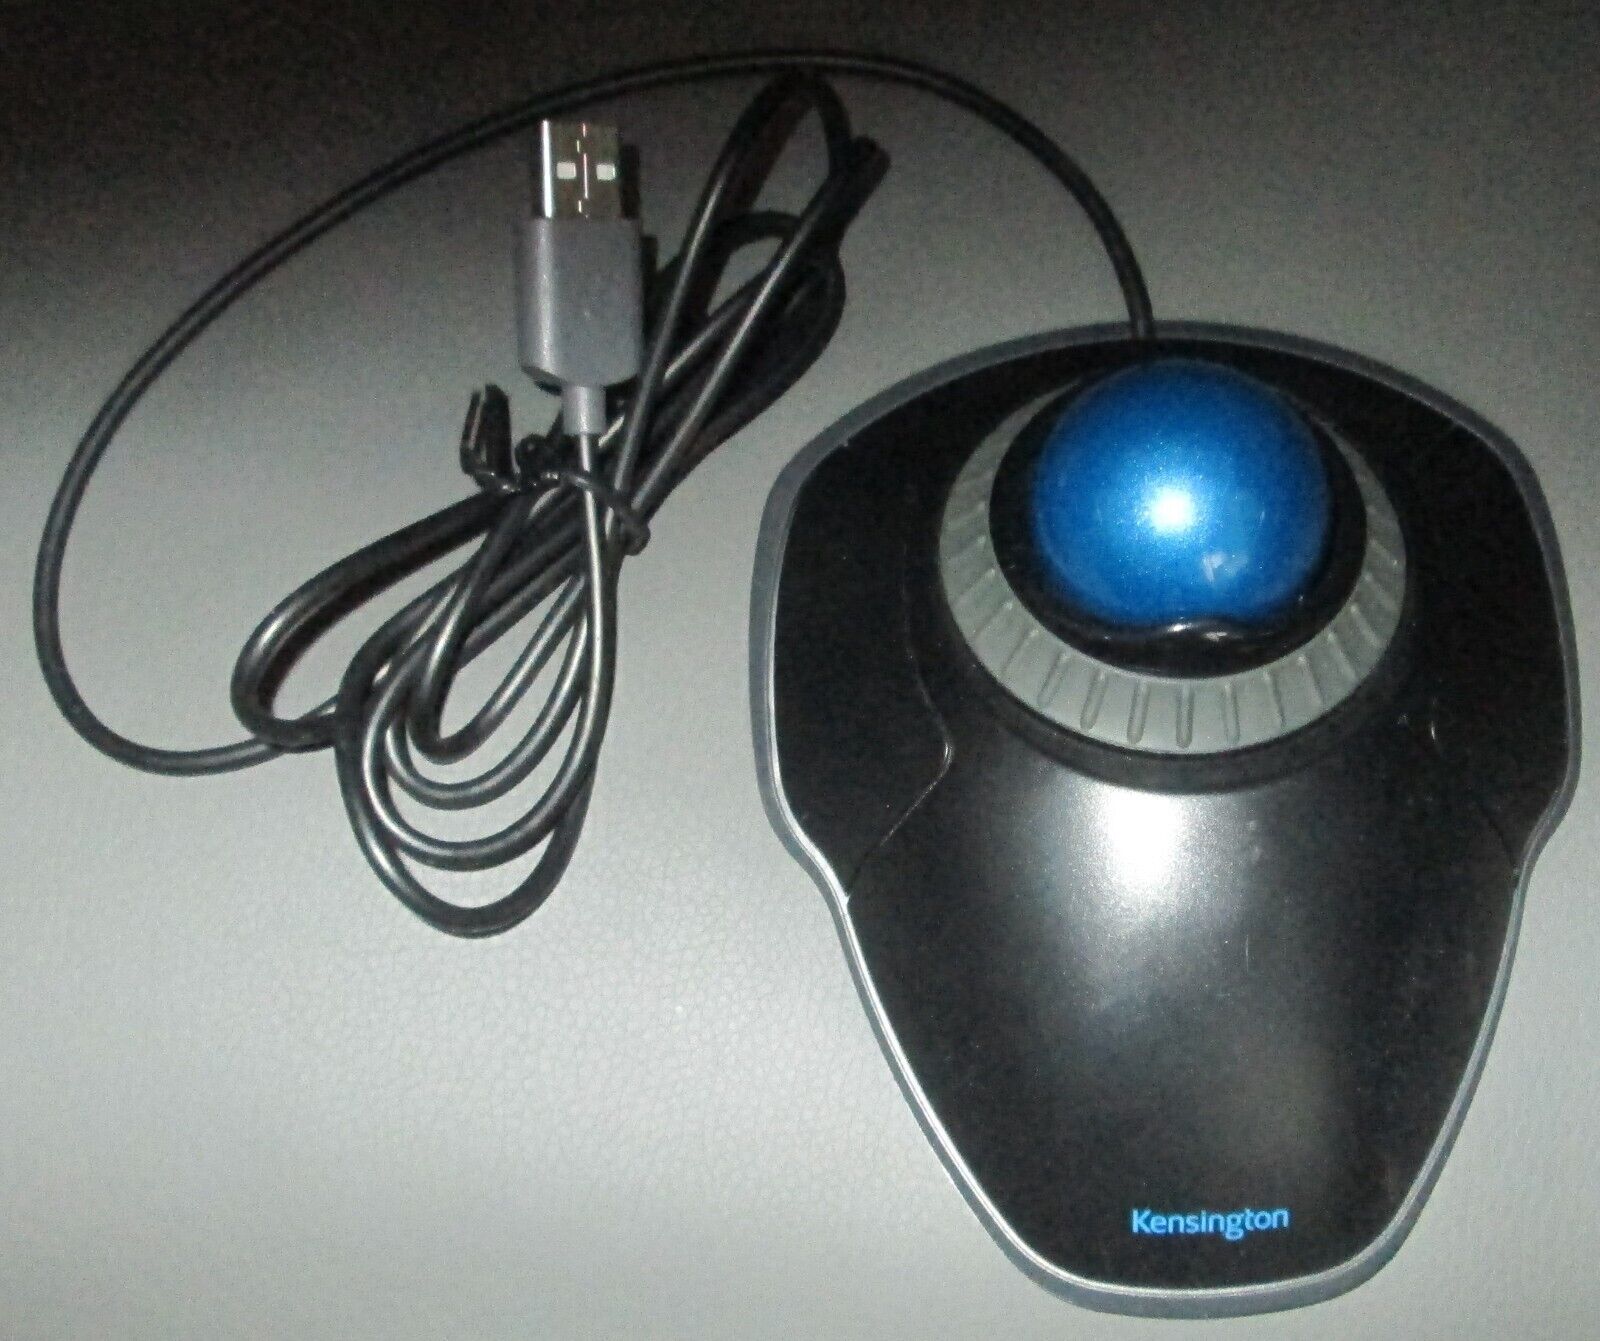 Kensington Mouse Trackball Orbit M01047 Smooth Scroll Ring Ergonomic Tested